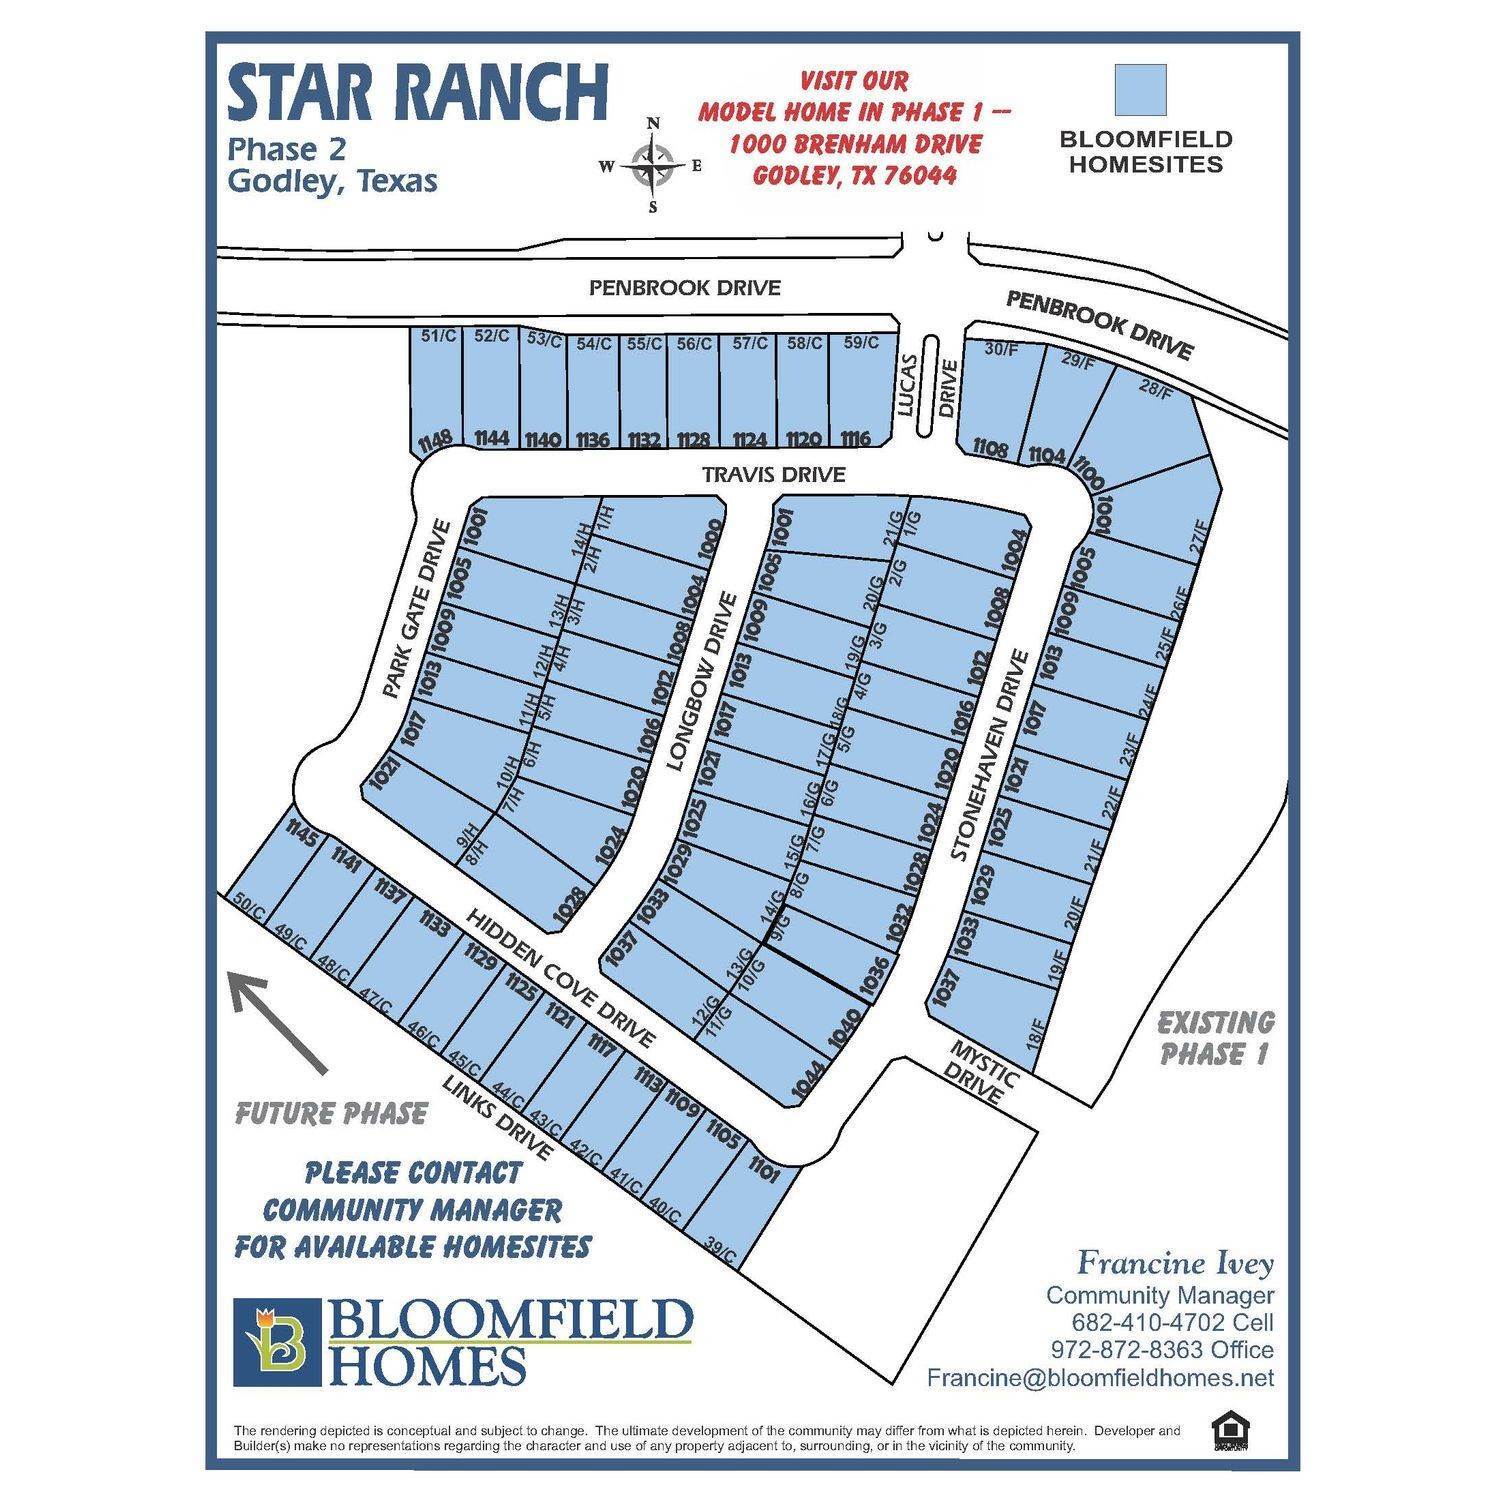 12. Star Ranch building at 1000 Brenham Drive, Godley, TX 76044